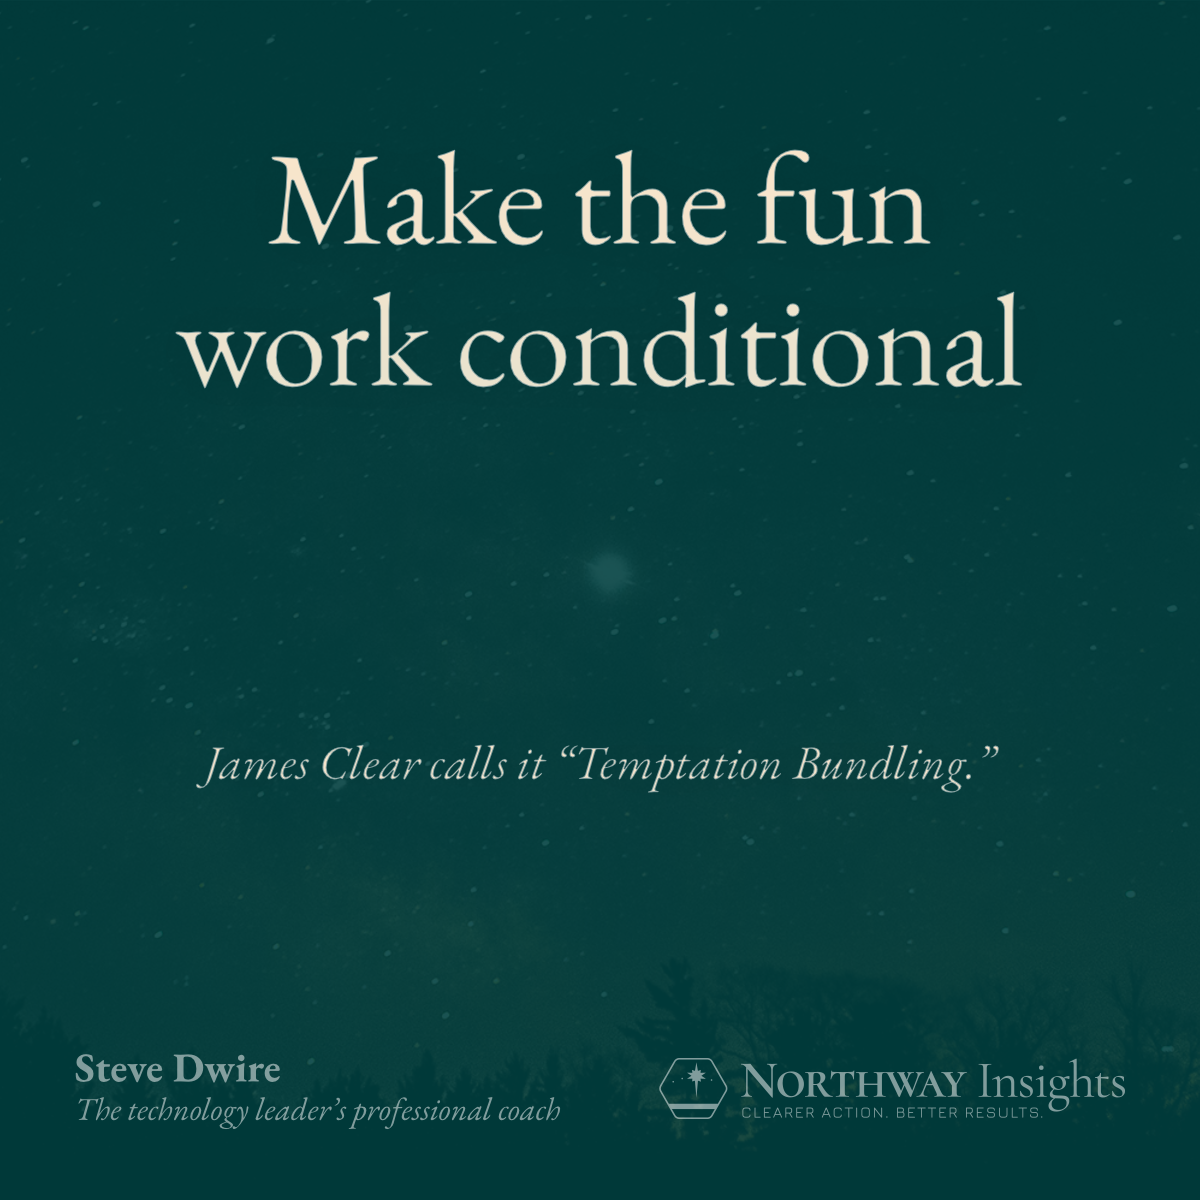 Make the fun work conditional (James Clear calls it "Temptation Bundling.")